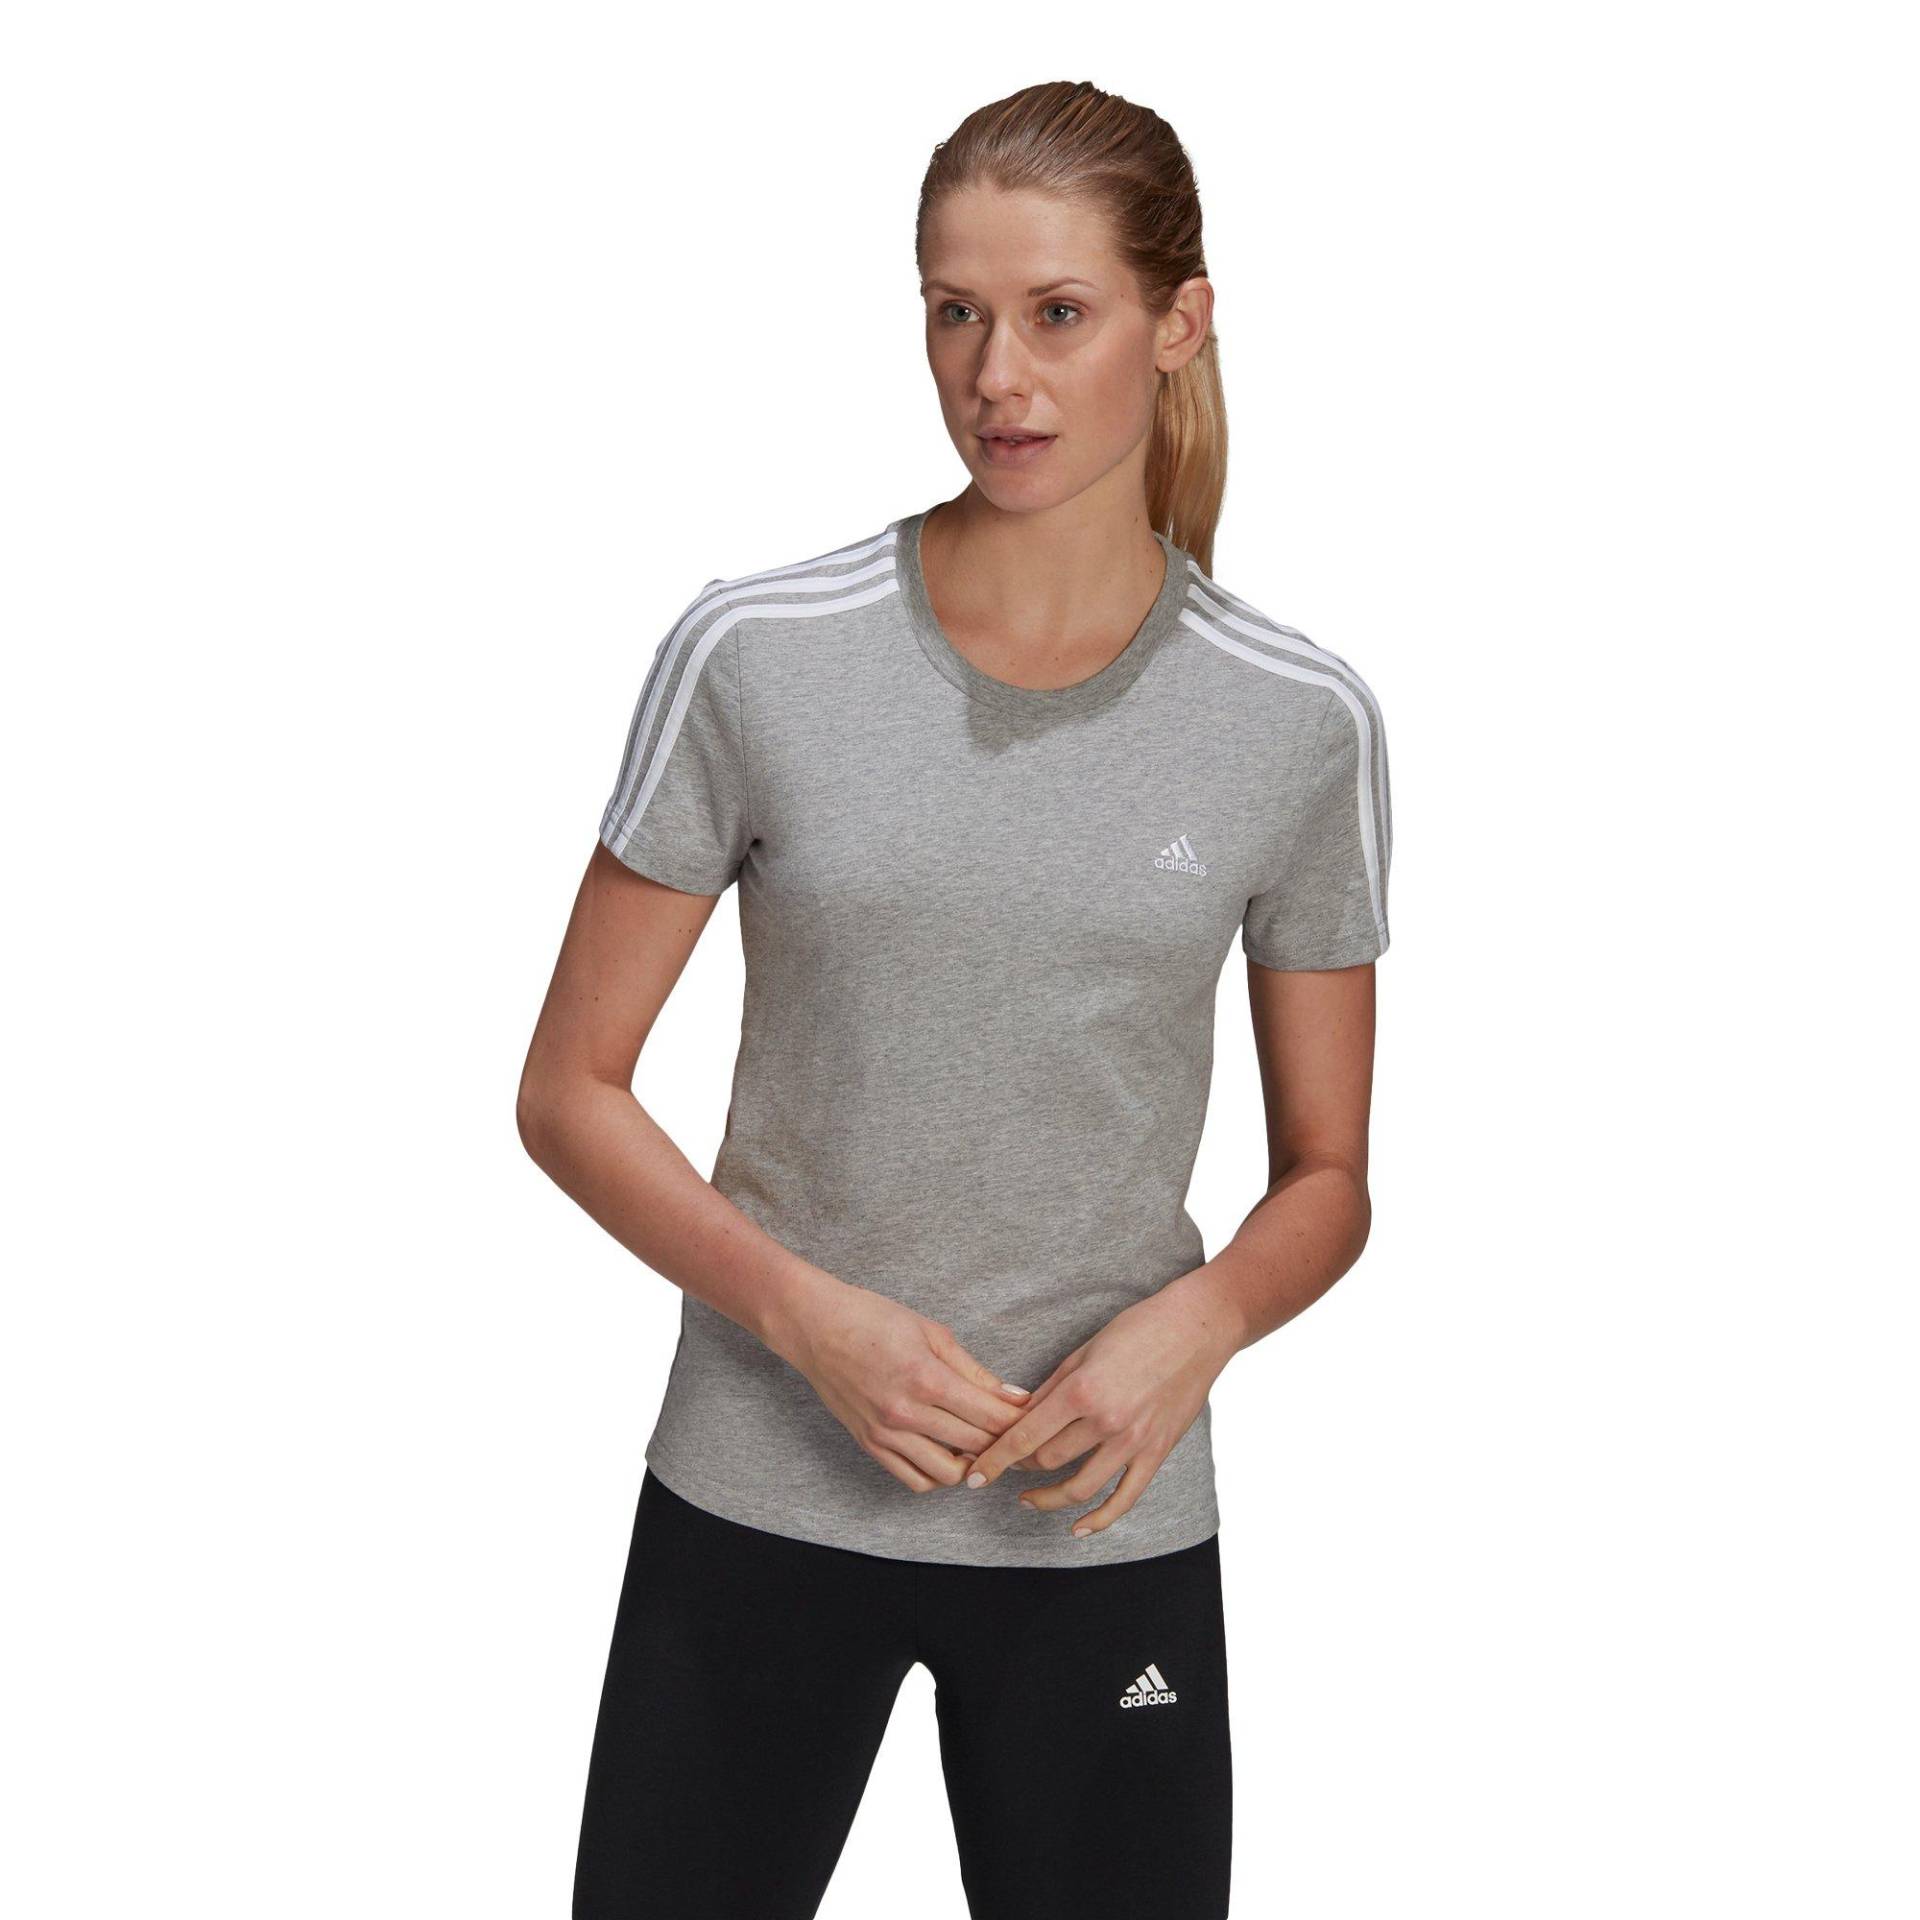 adidas T-shirt Damen Grau Melange XS von Adidas